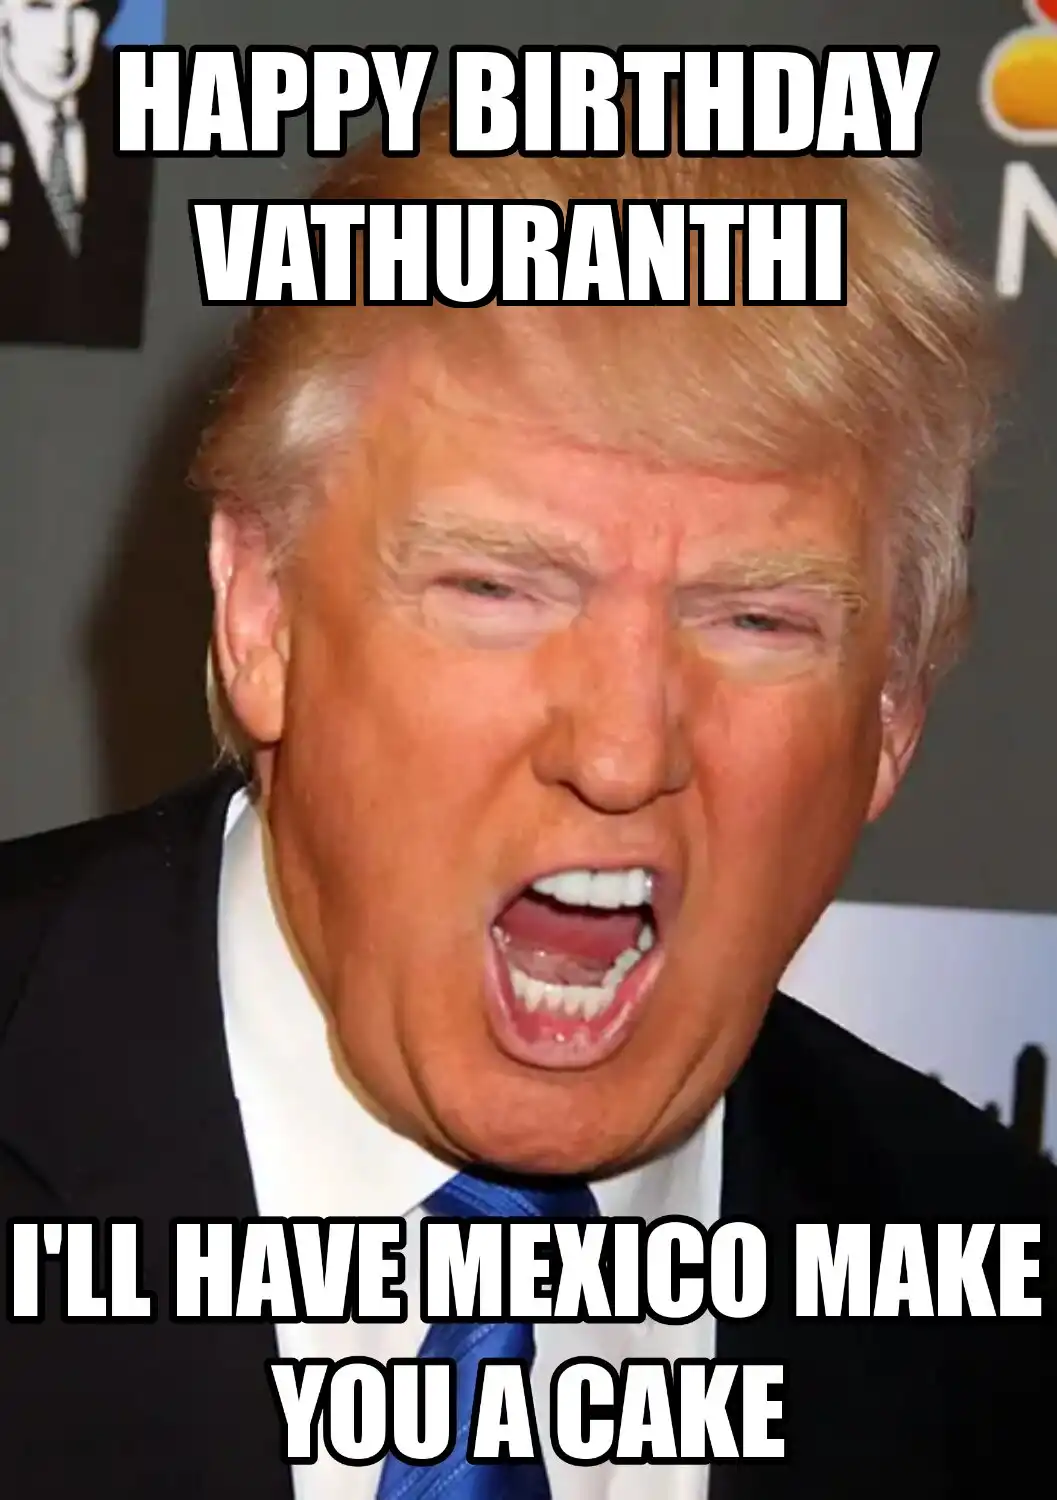 Happy Birthday Vathuranthi Mexico Make You A Cake Meme